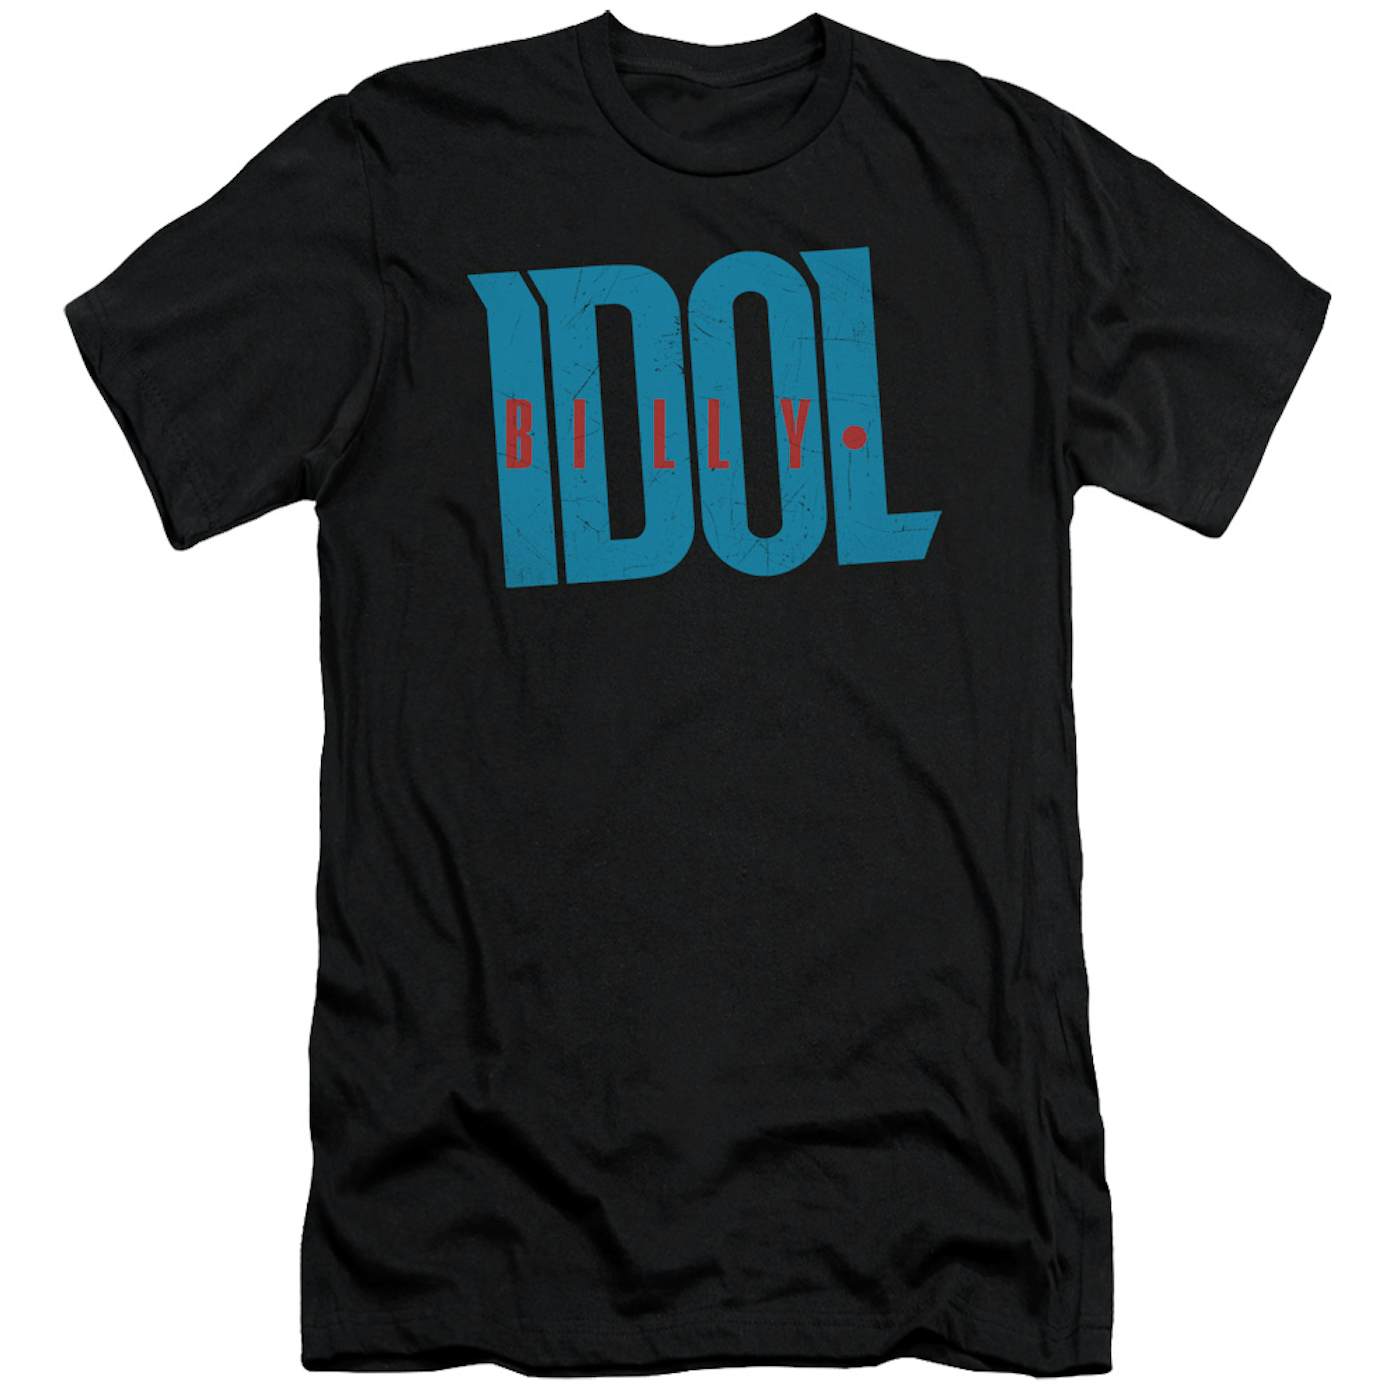 Billy Idol Slim-Fit Shirt | LOGO Slim-Fit Tee